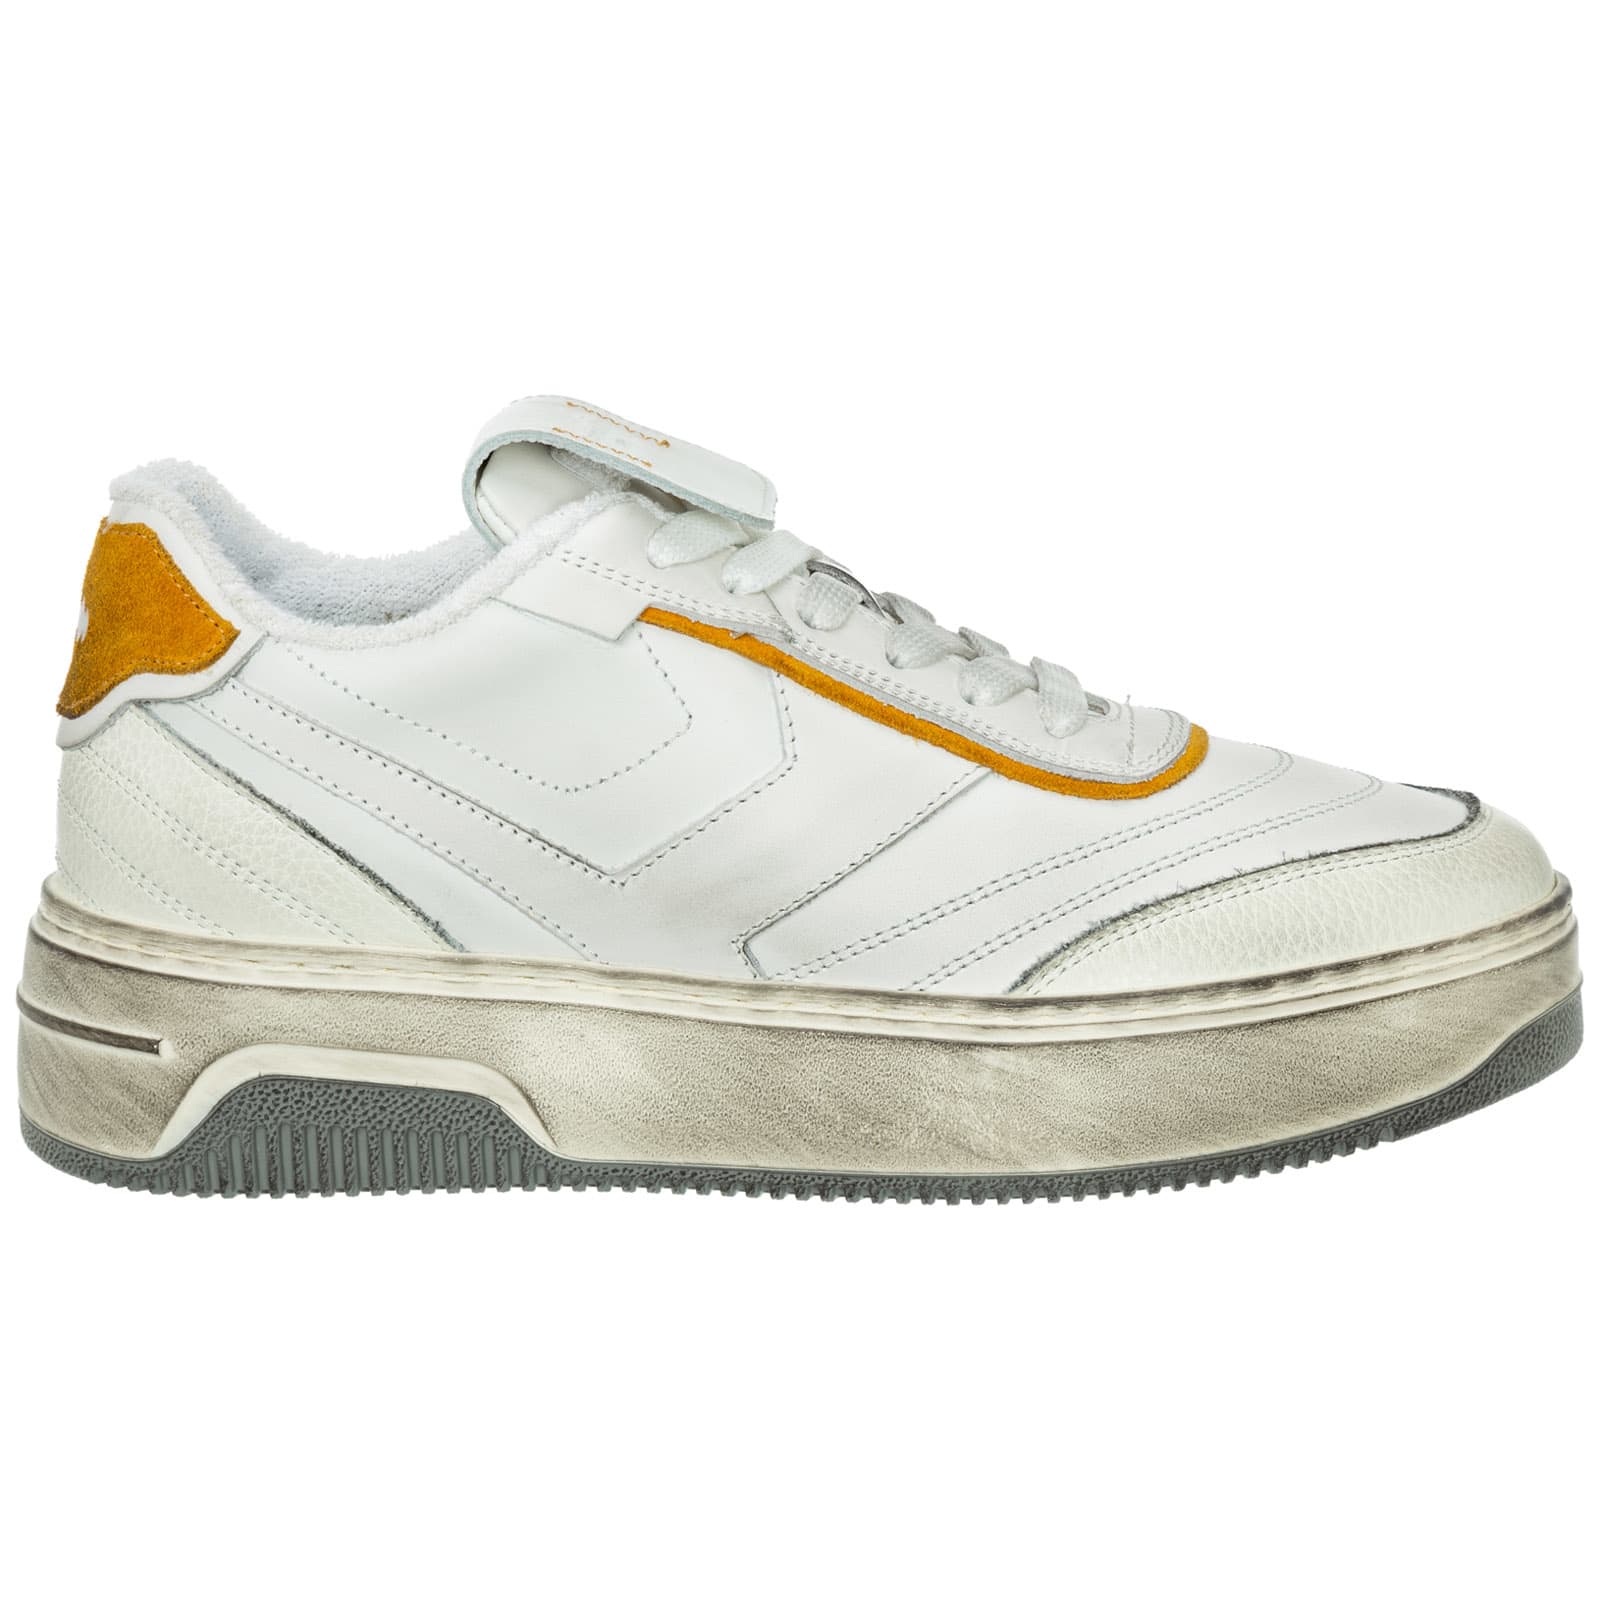 Pantofola D'Oro Pantofola Doro Pdo135 Sneakers